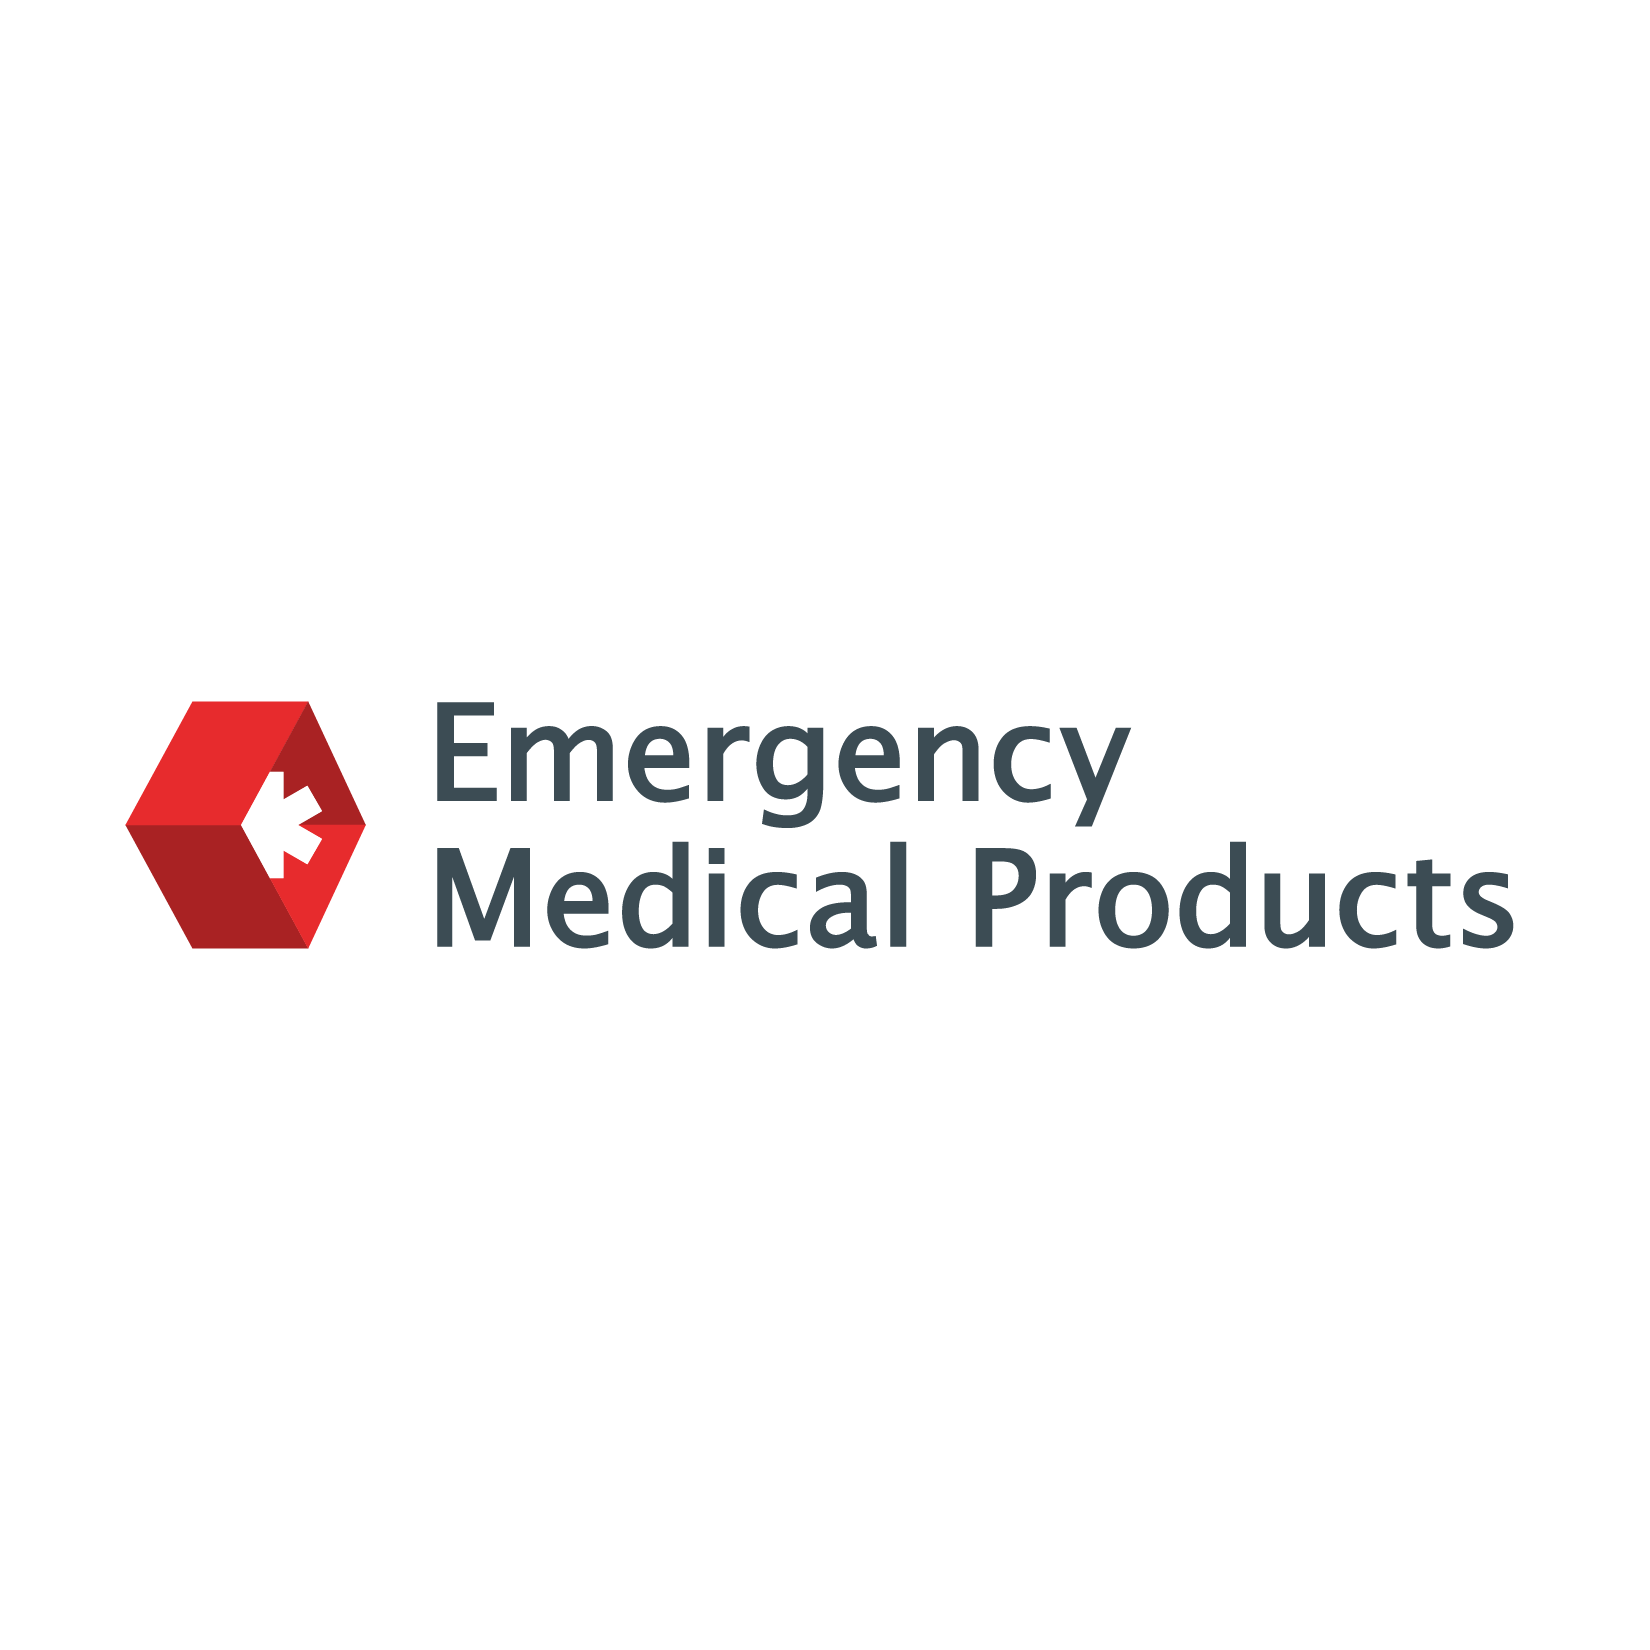 emp emergency medical products